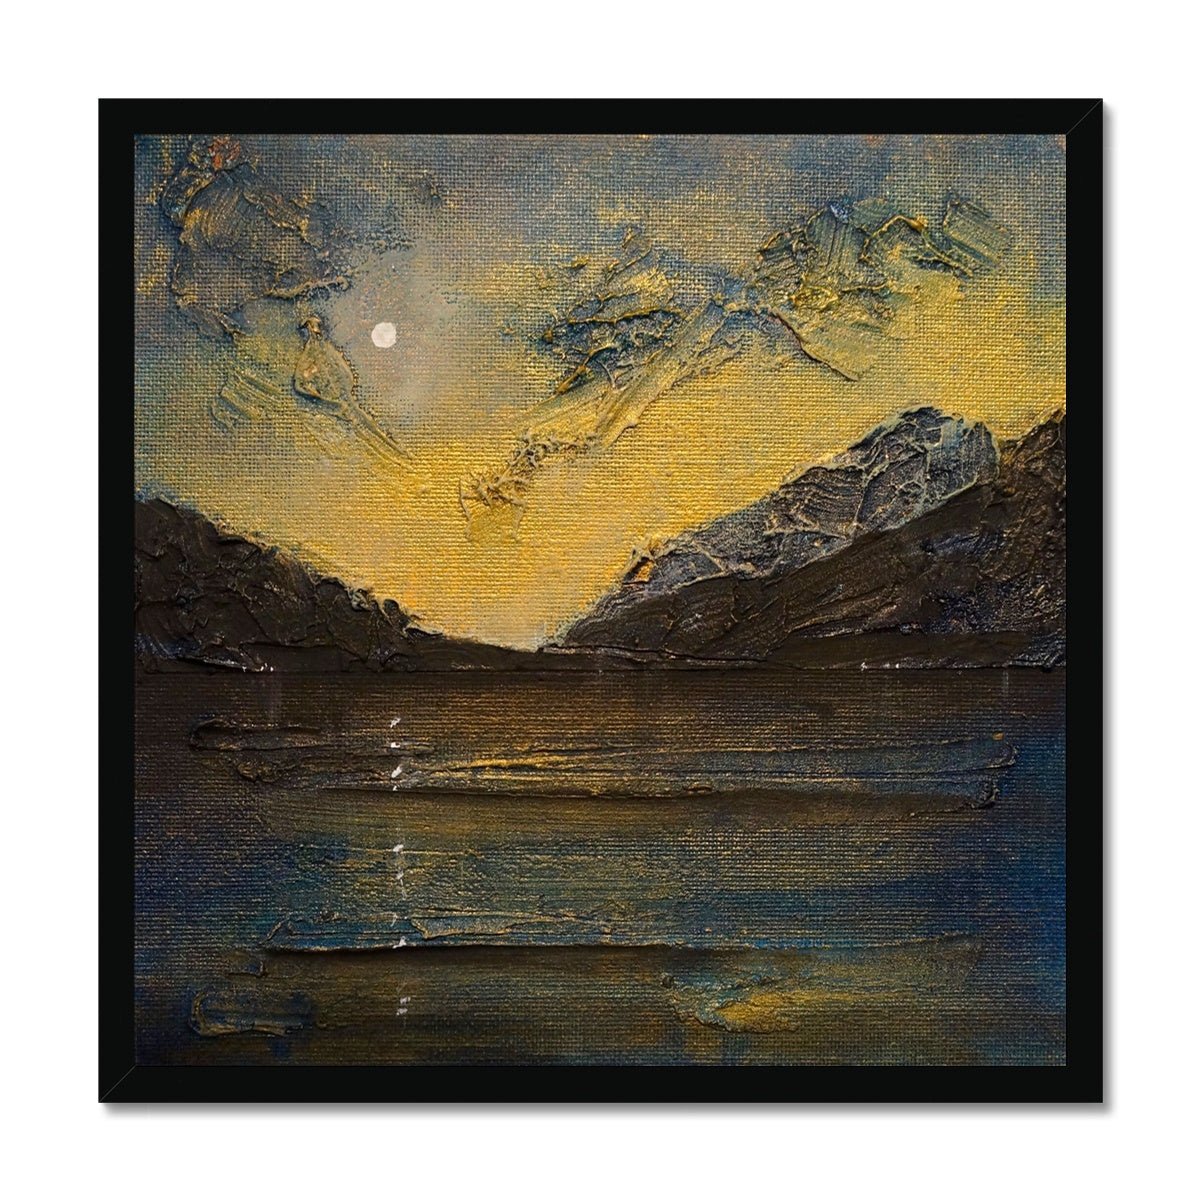 Loch Lomond Moonlight Painting | Framed Prints From Scotland-Framed Prints-Scottish Lochs & Mountains Art Gallery-20"x20"-Black Frame-Paintings, Prints, Homeware, Art Gifts From Scotland By Scottish Artist Kevin Hunter